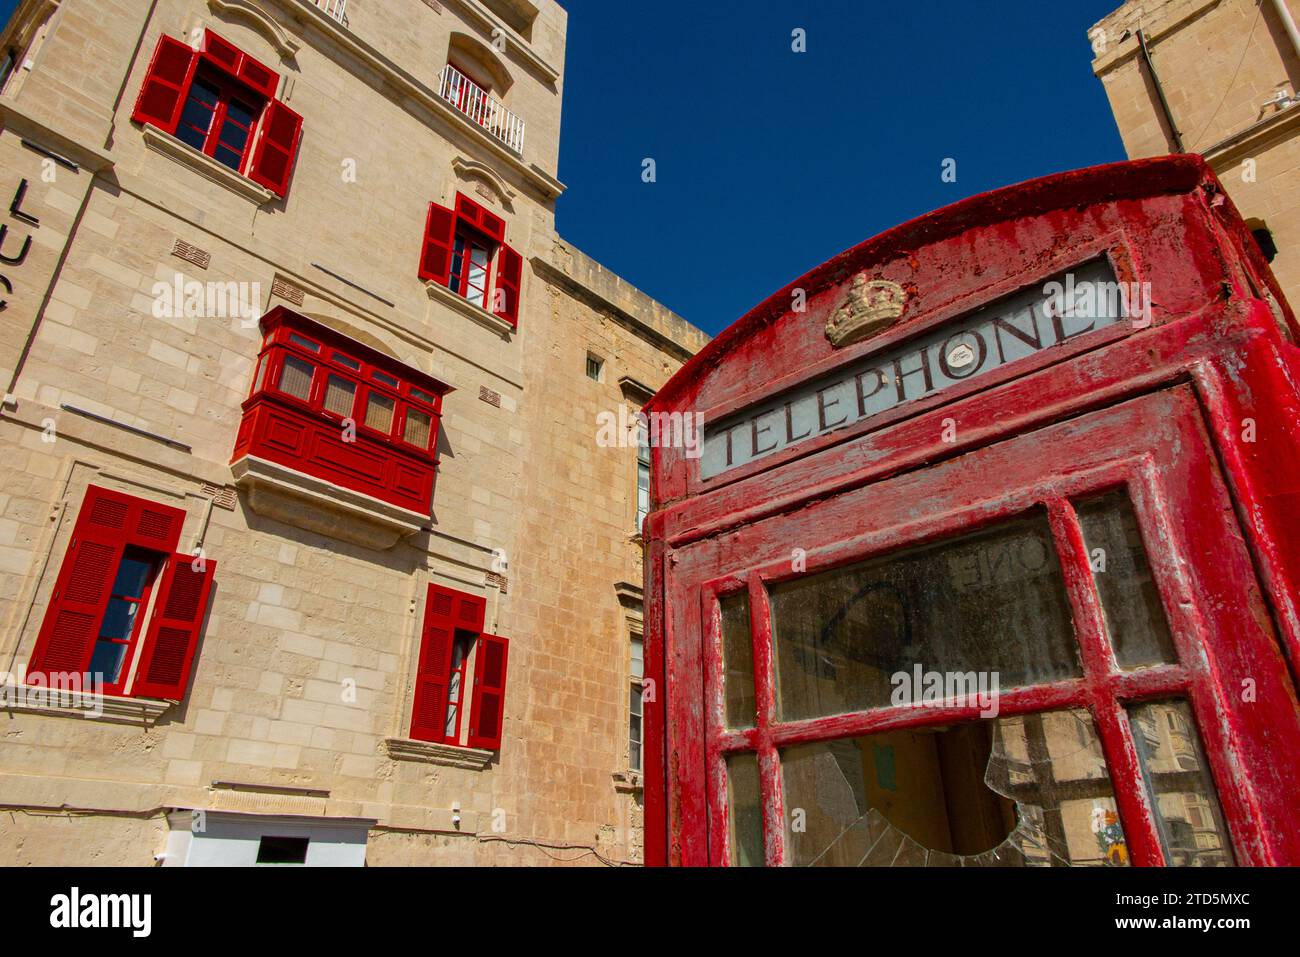 A red British telephone box outside the Bridge bar building, Liesse with a red British telephone box in the foreground, Valletta, Malta. Stock Photo